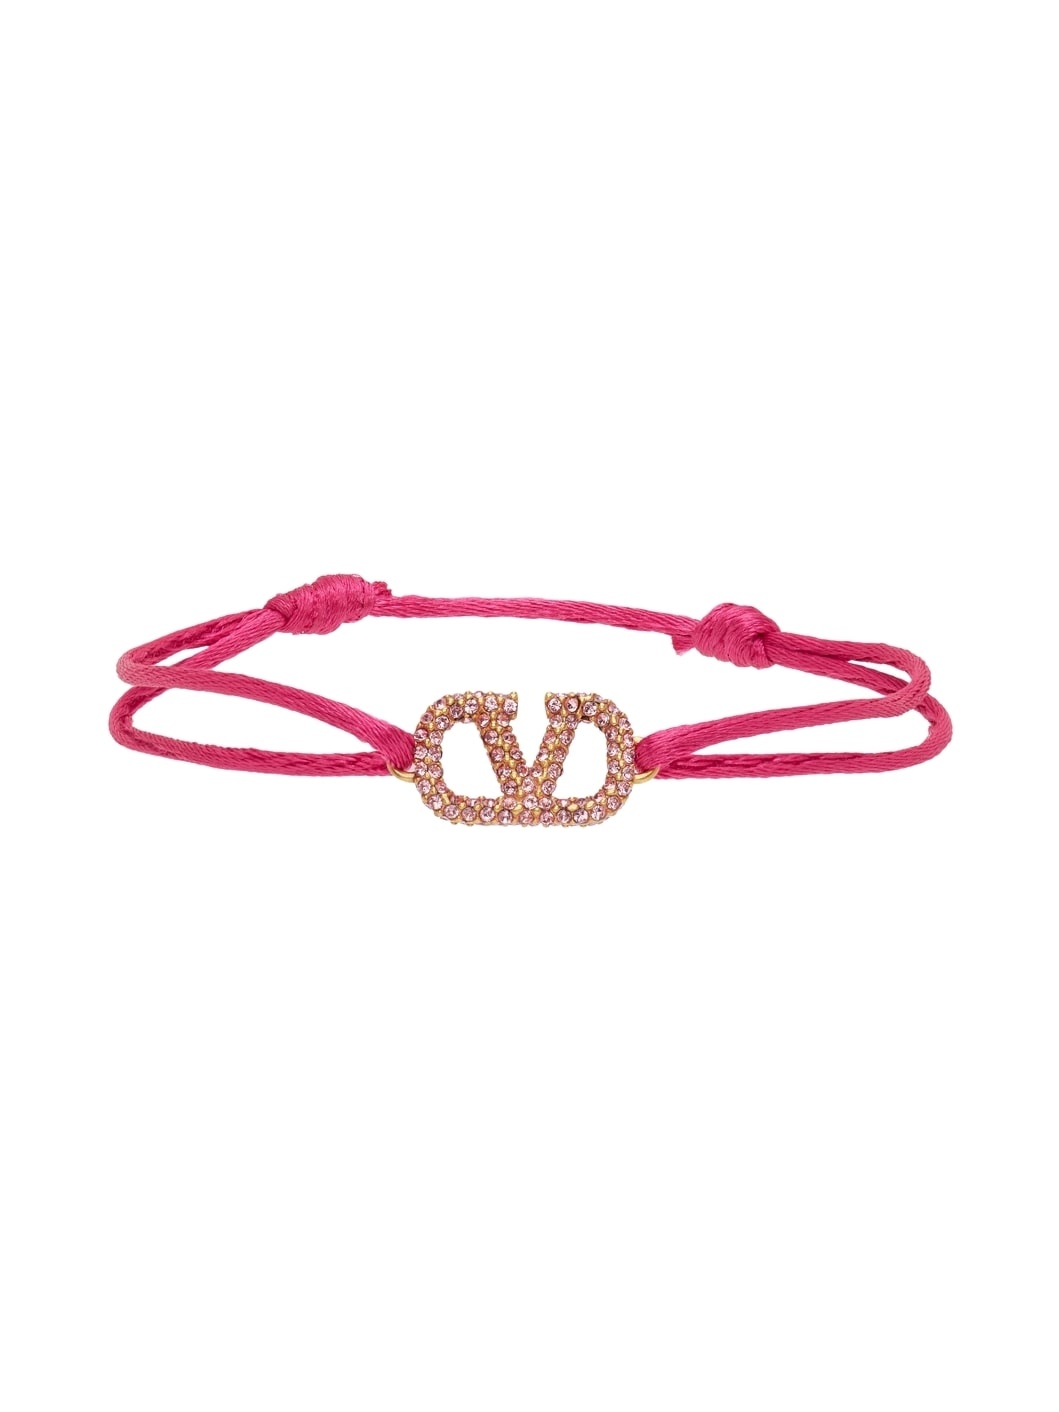 Pink Swarovski Crystal VLogo Signature Bracelet - 1